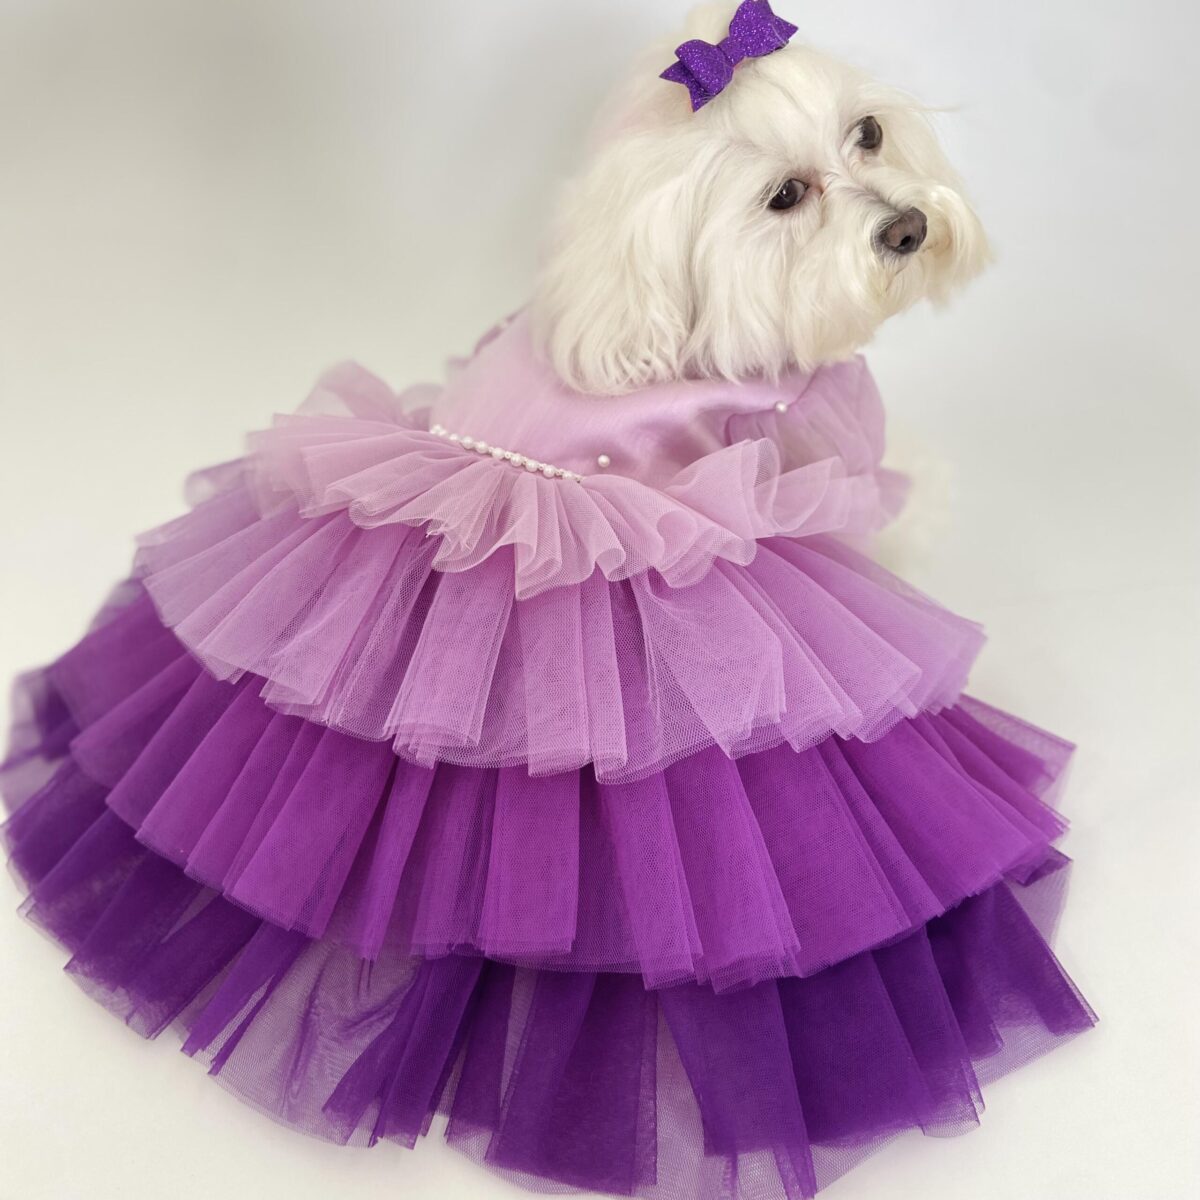 Ombré Dress Hues of Purple 7